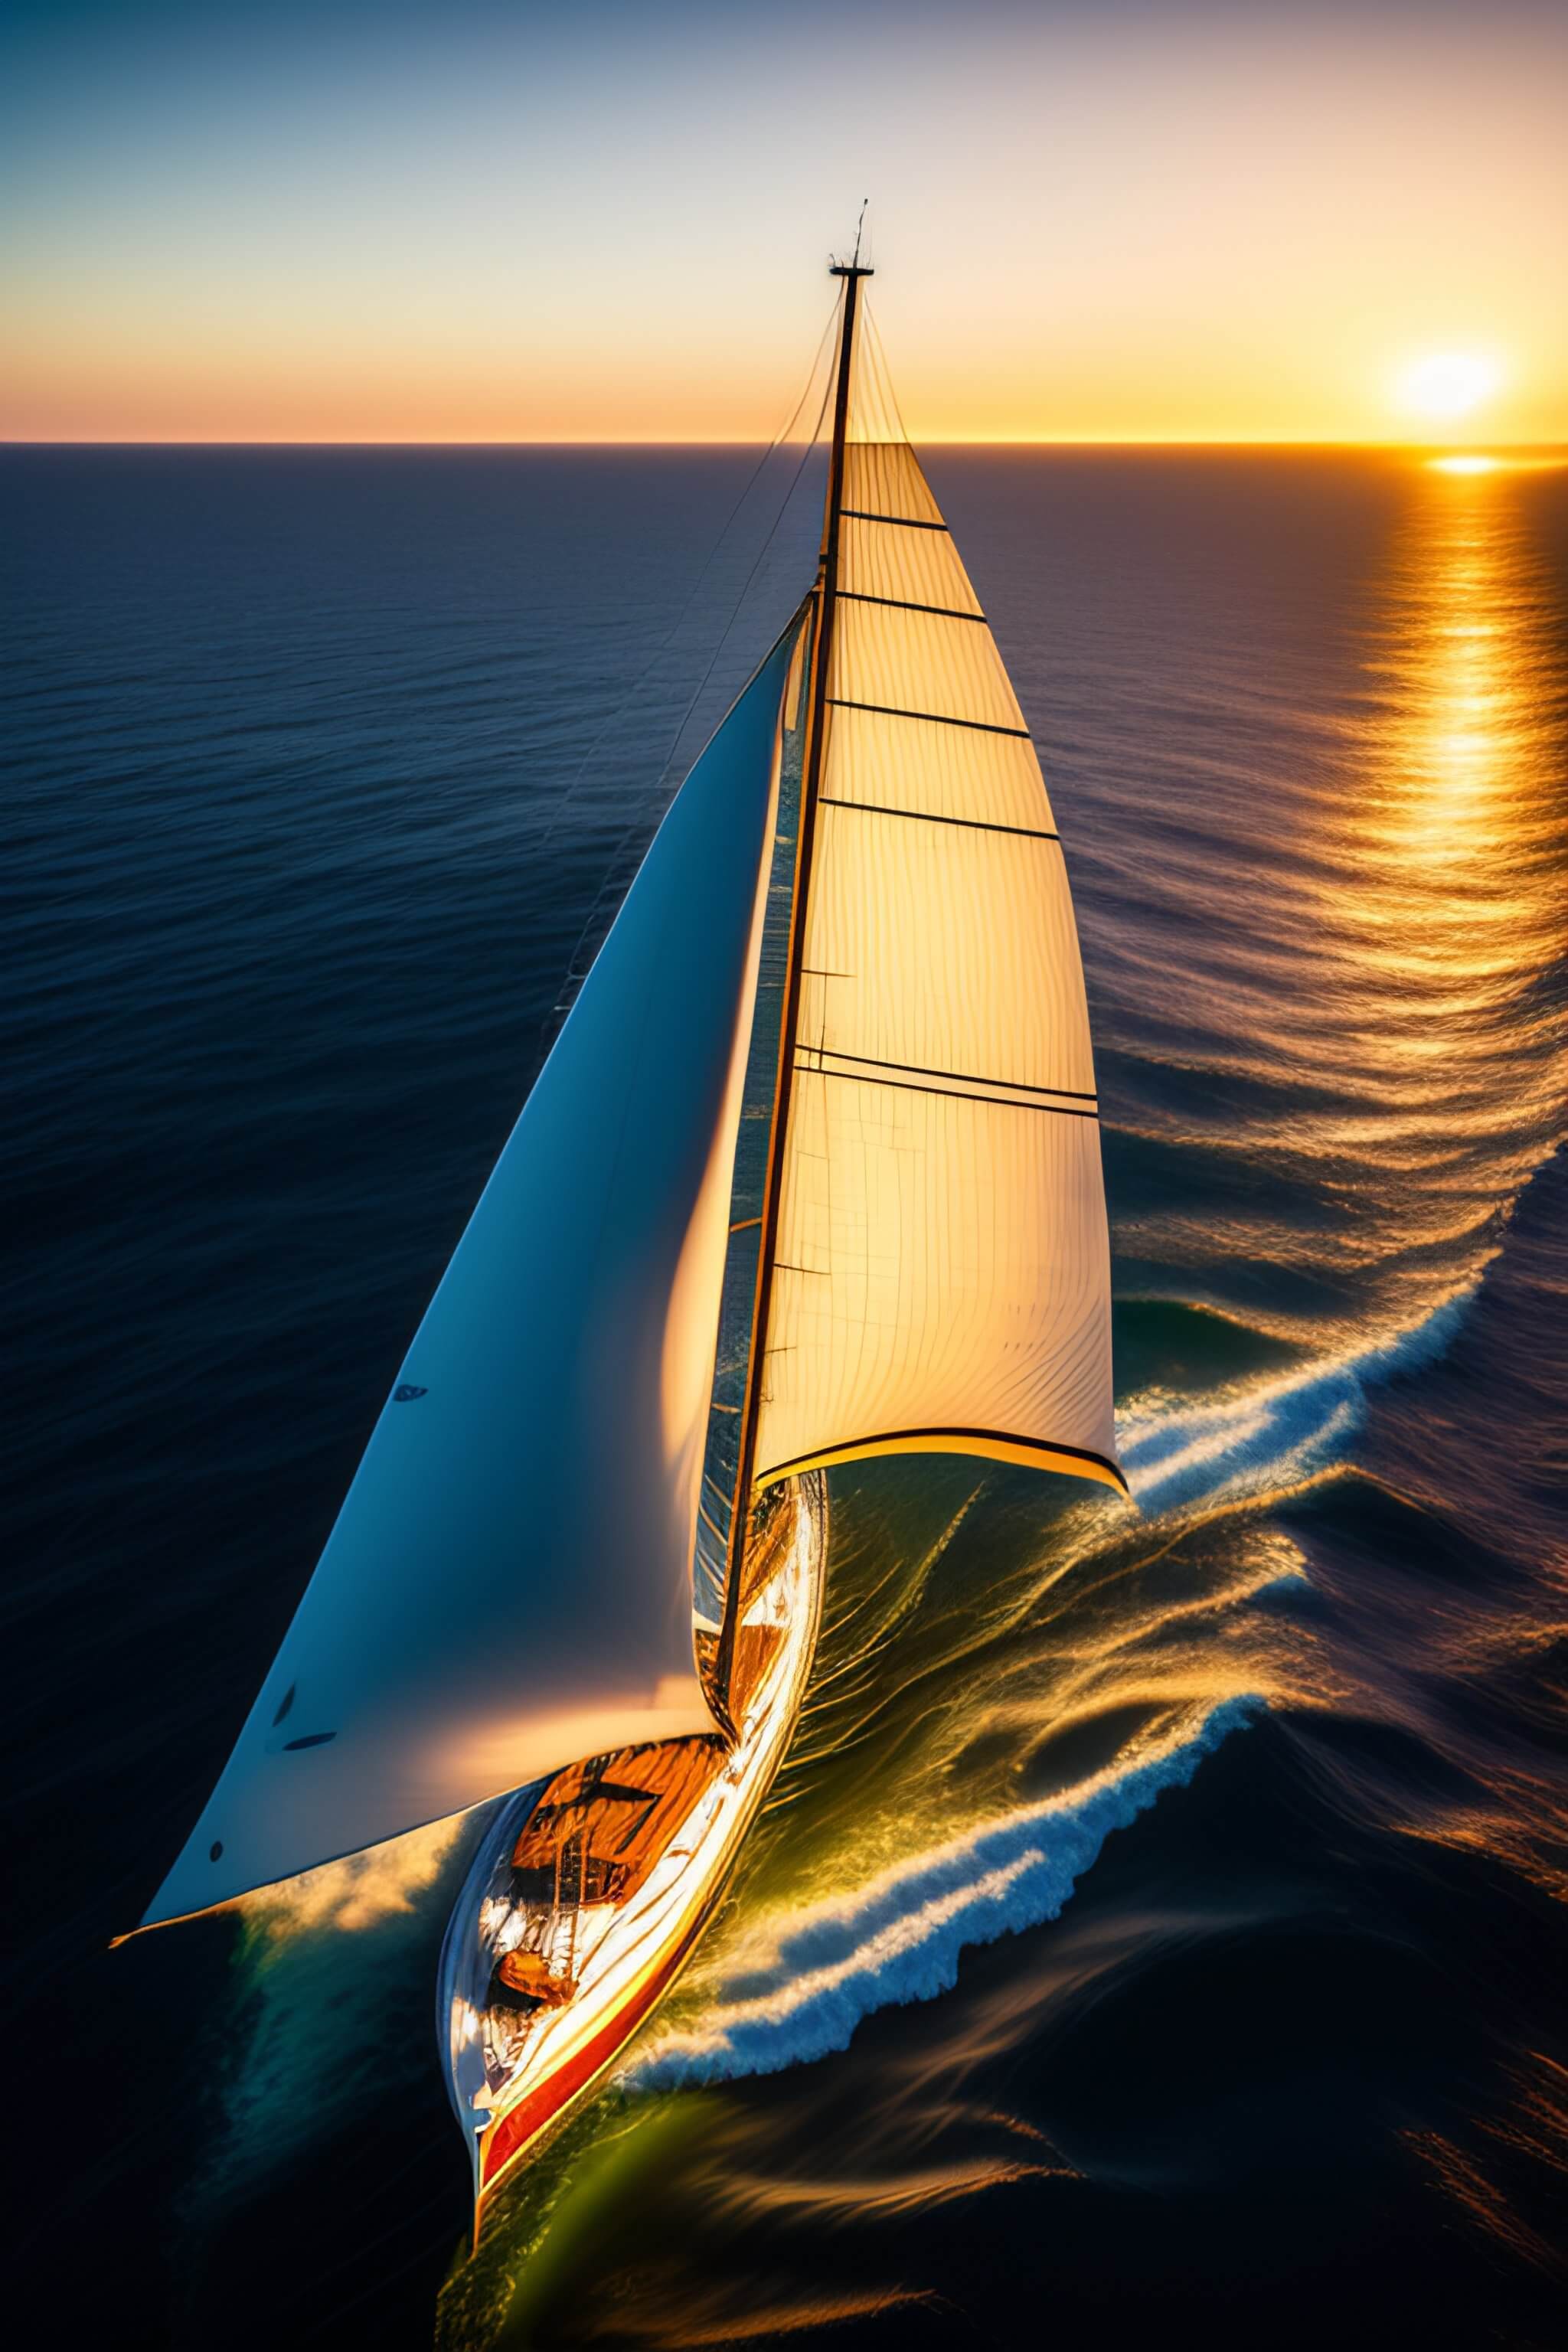 Yachting - Sailing on Million-Dollar Waves ⛵💲